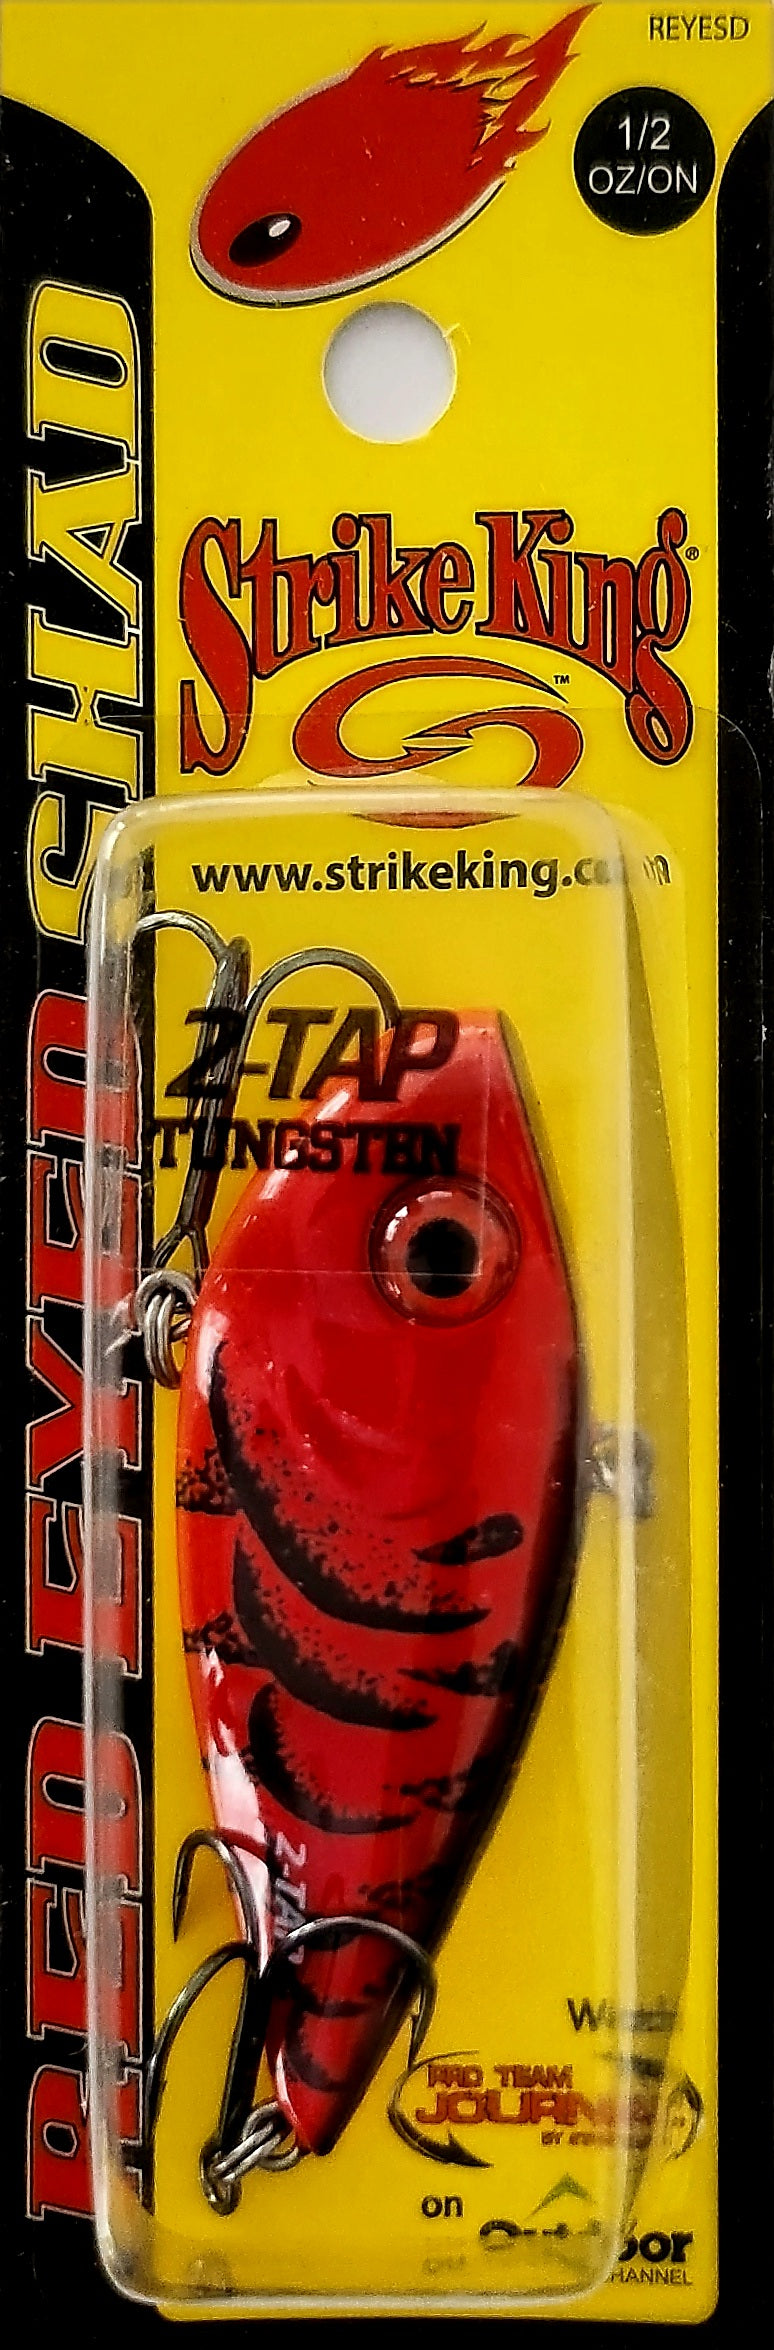 Strike King 2-Tap Red Eye Shad lipless Tungsten